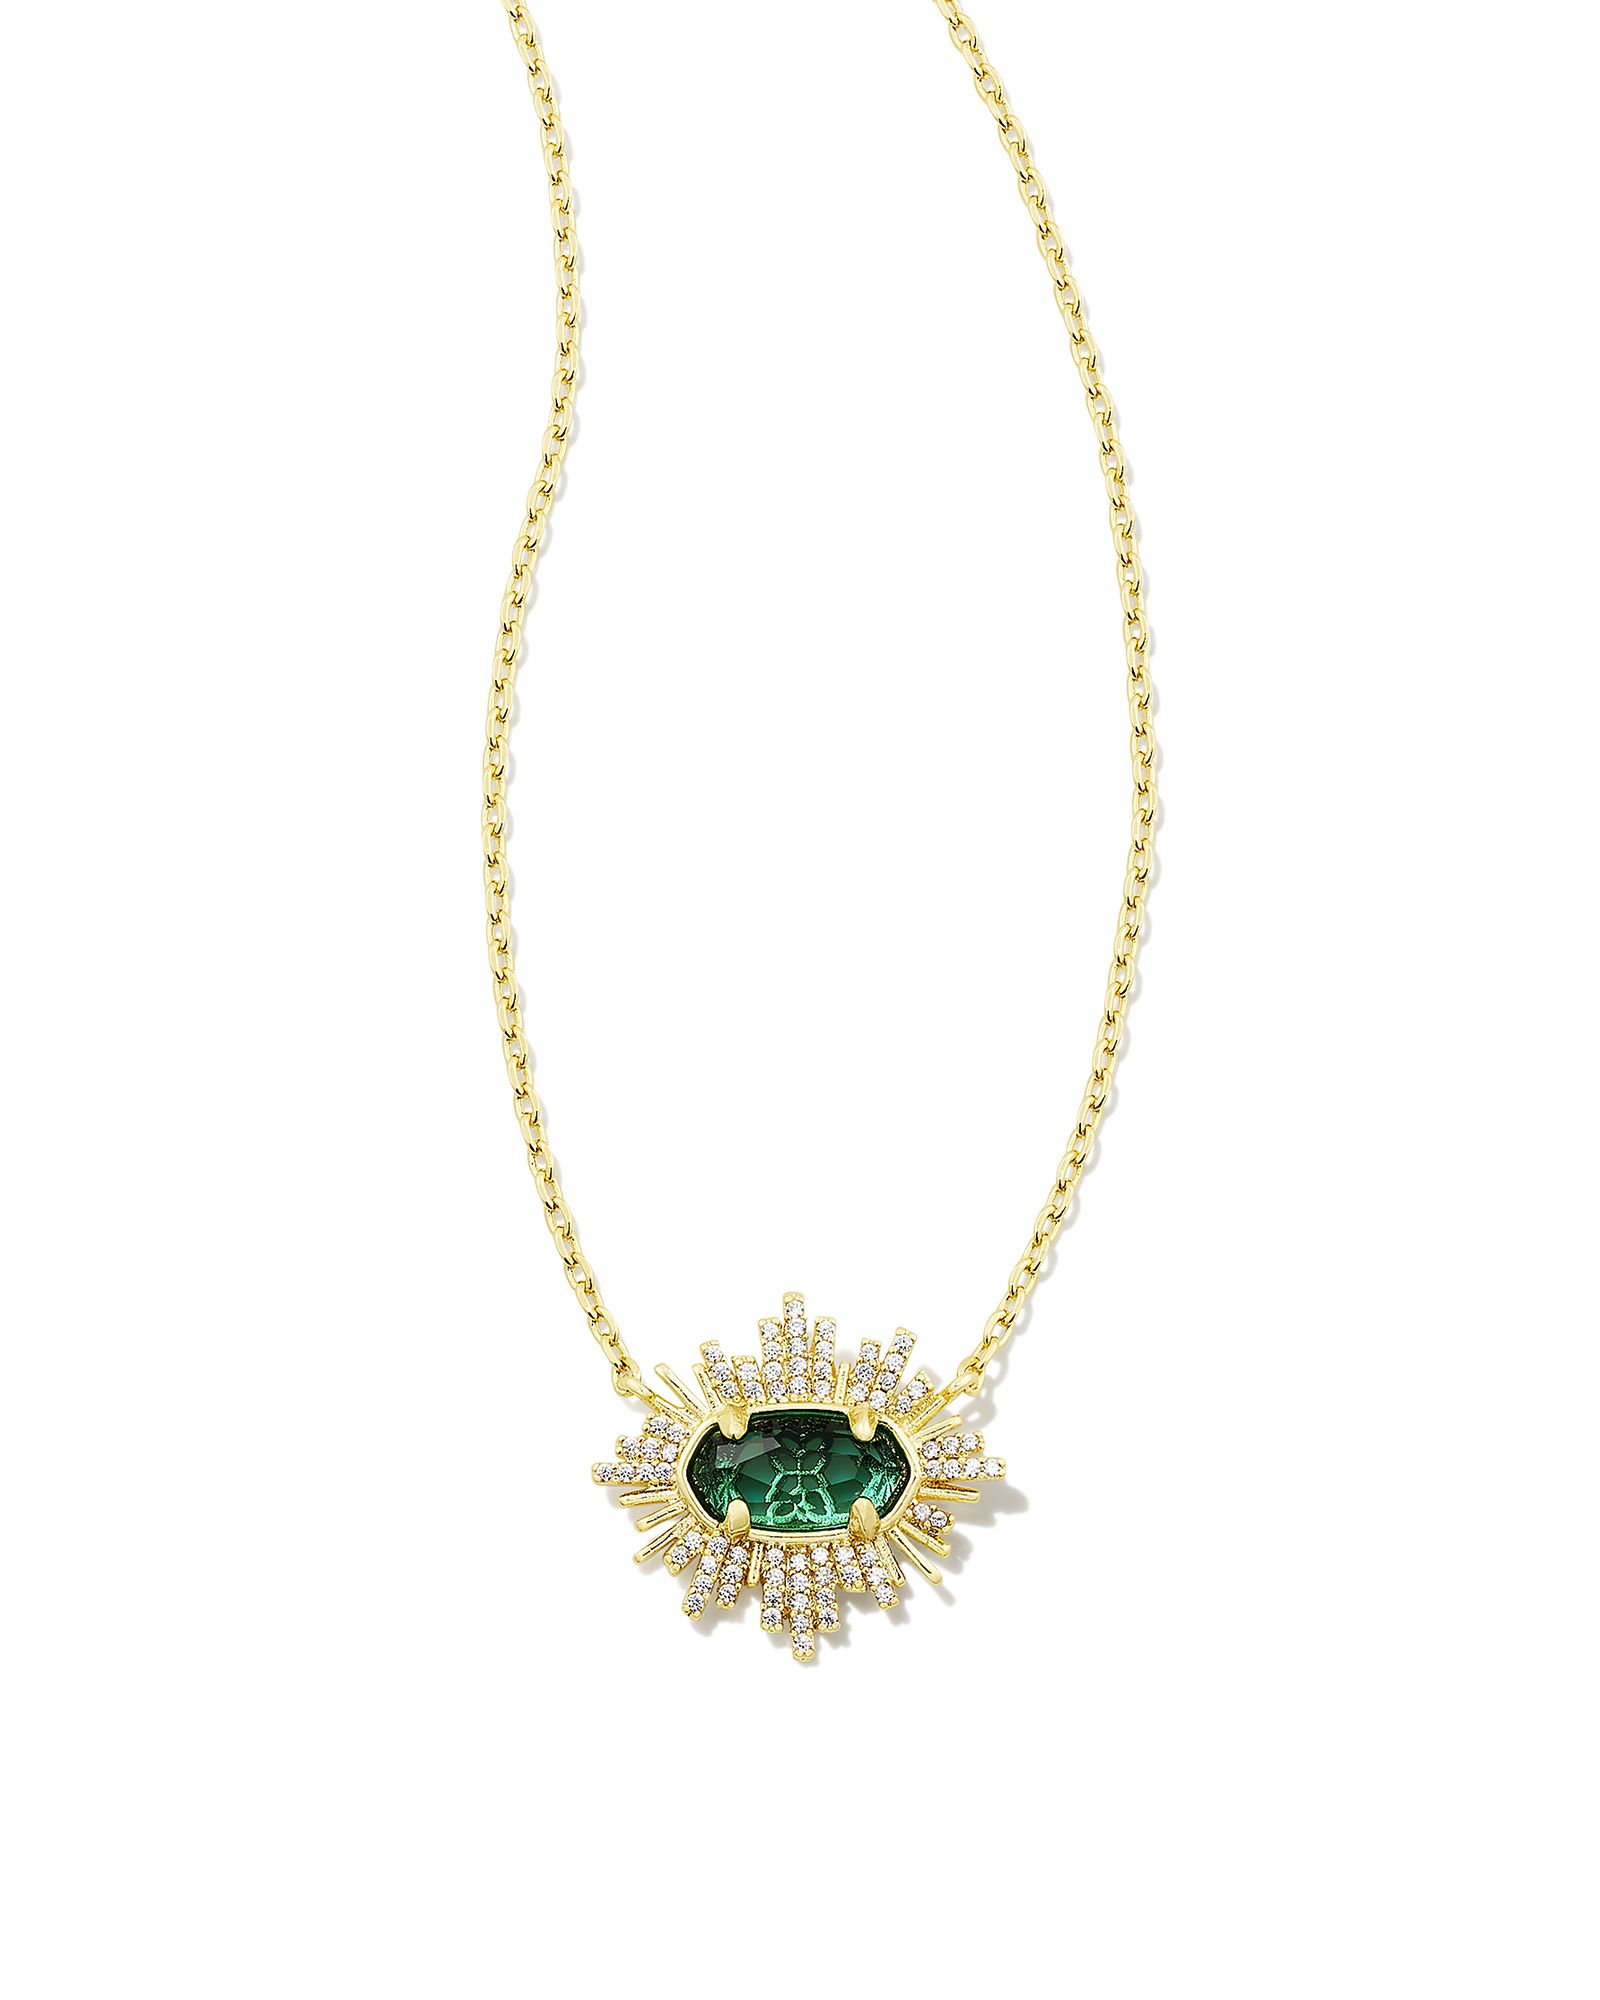 Grayson Gold Sunburst Frame Short Pendant Necklace in Green Glass | Kendra Scott | Kendra Scott